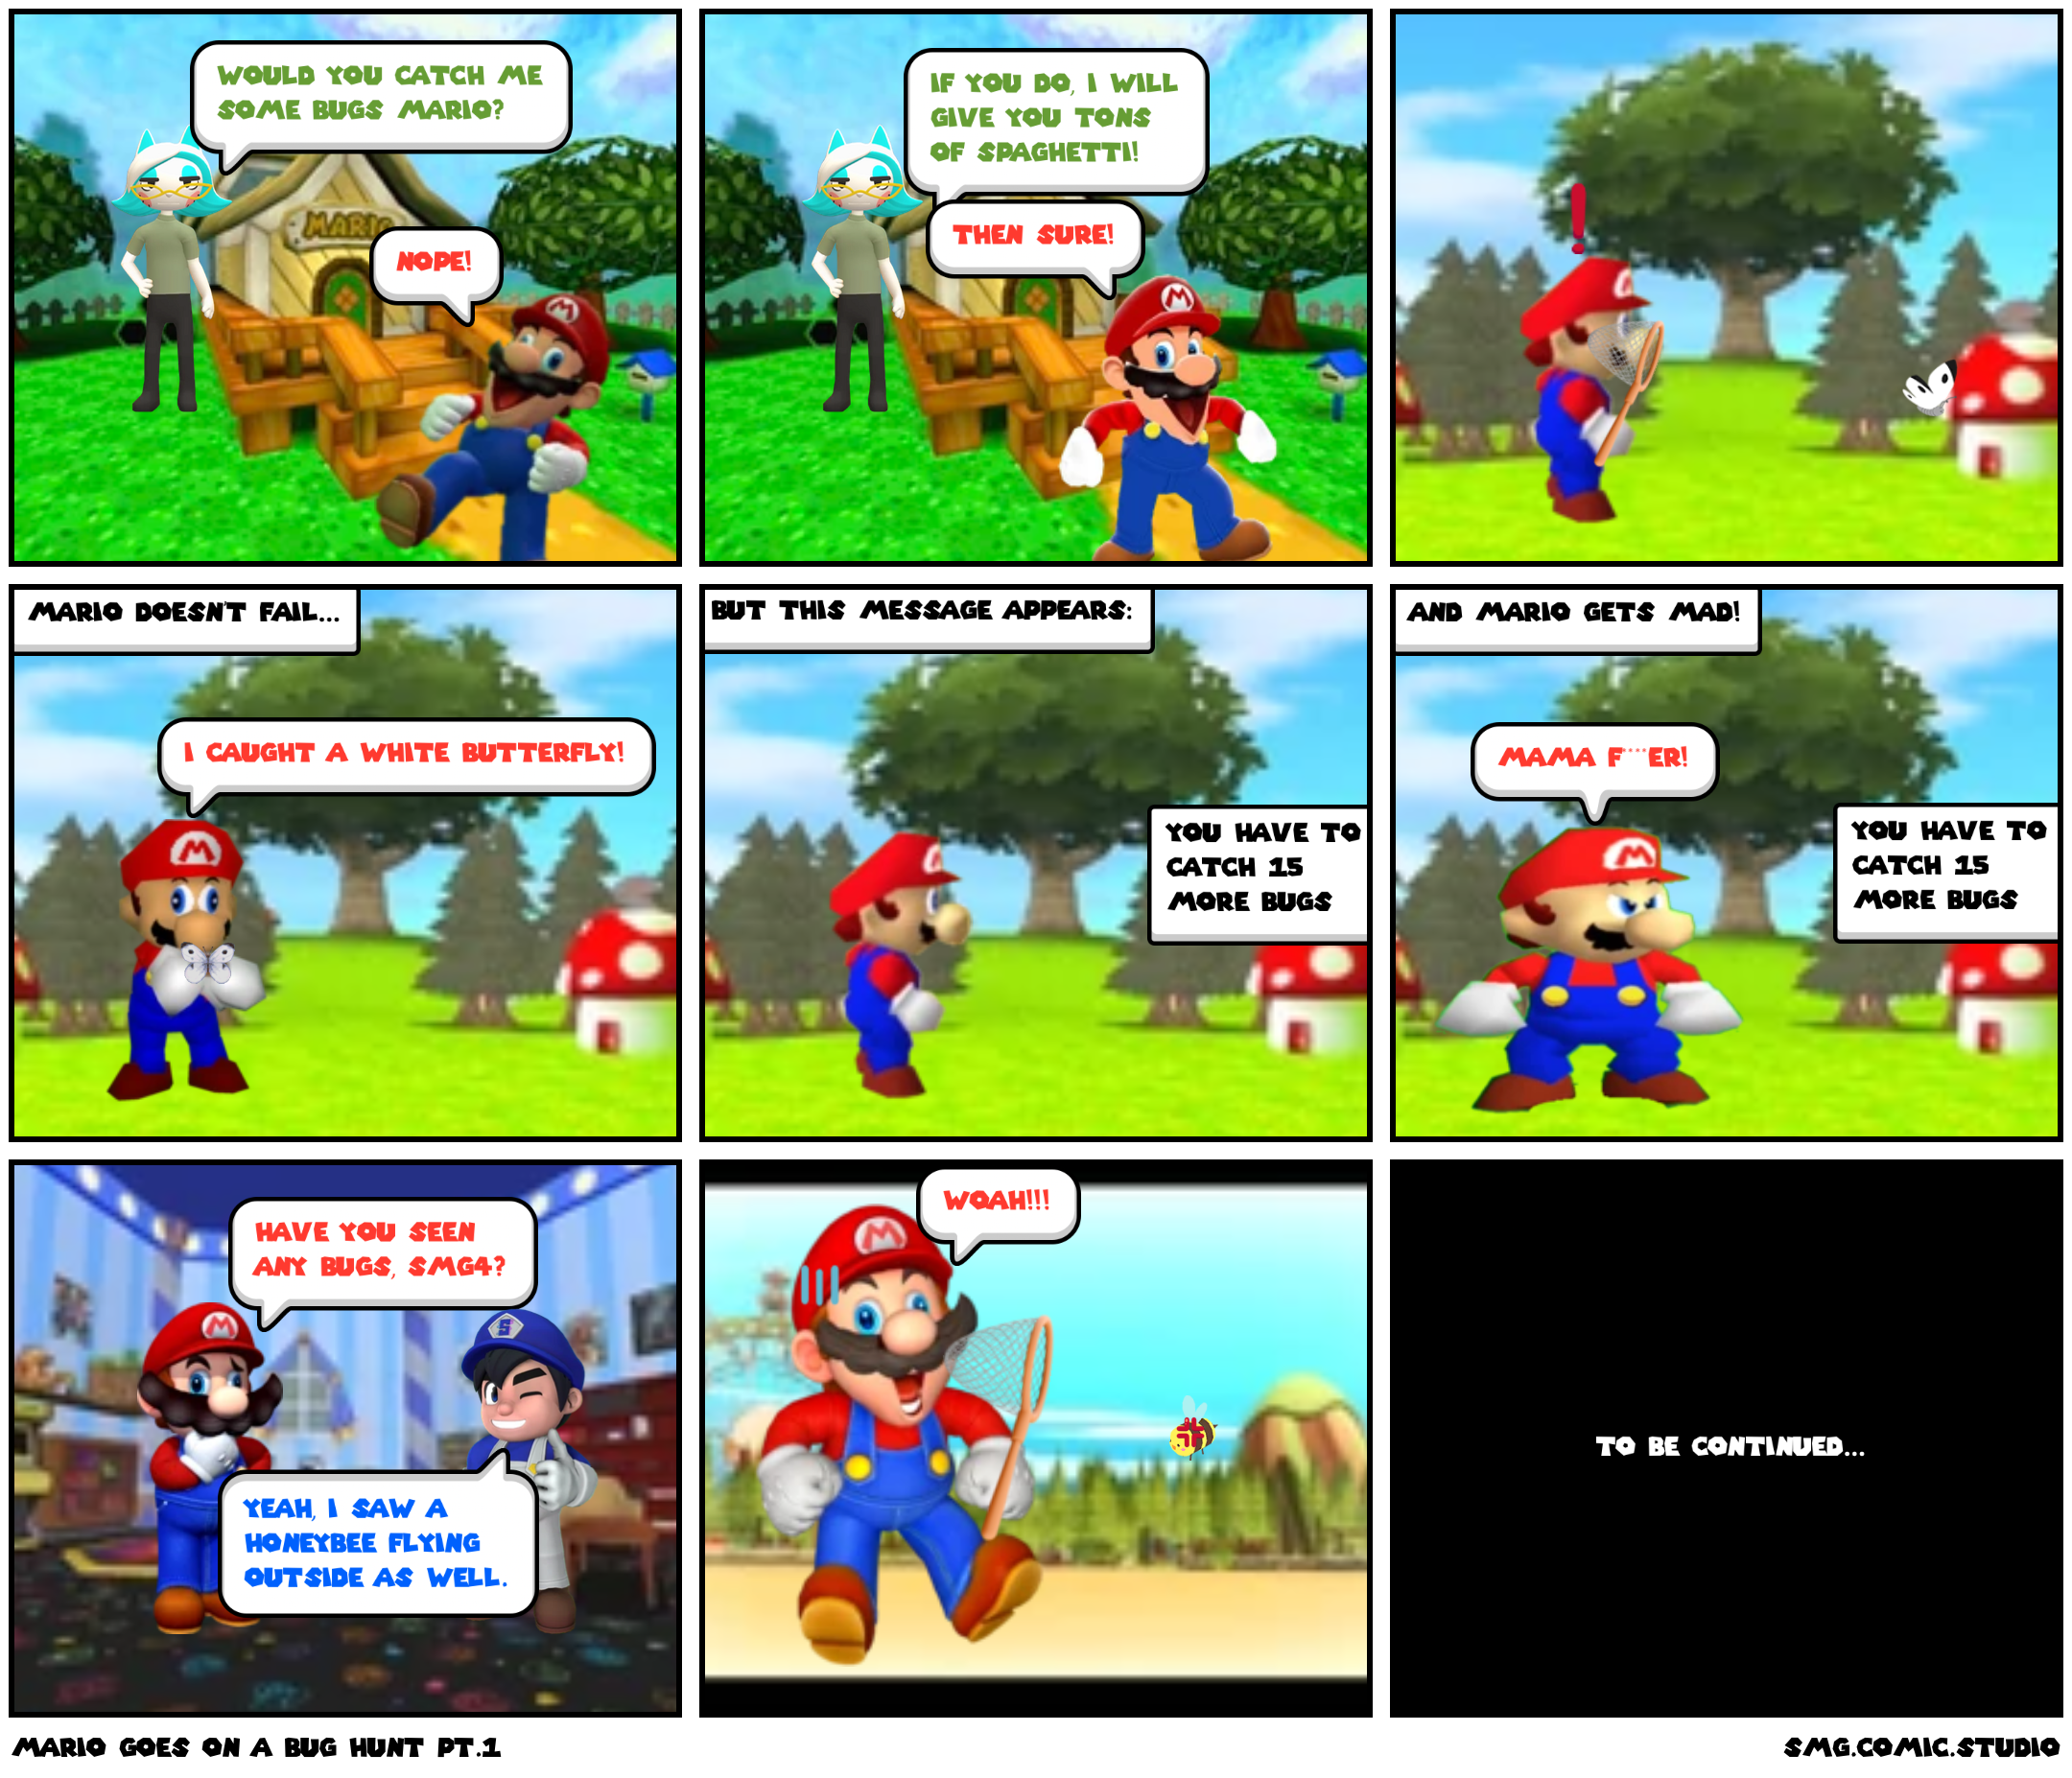 Mario goes on a bug hunt pt.1